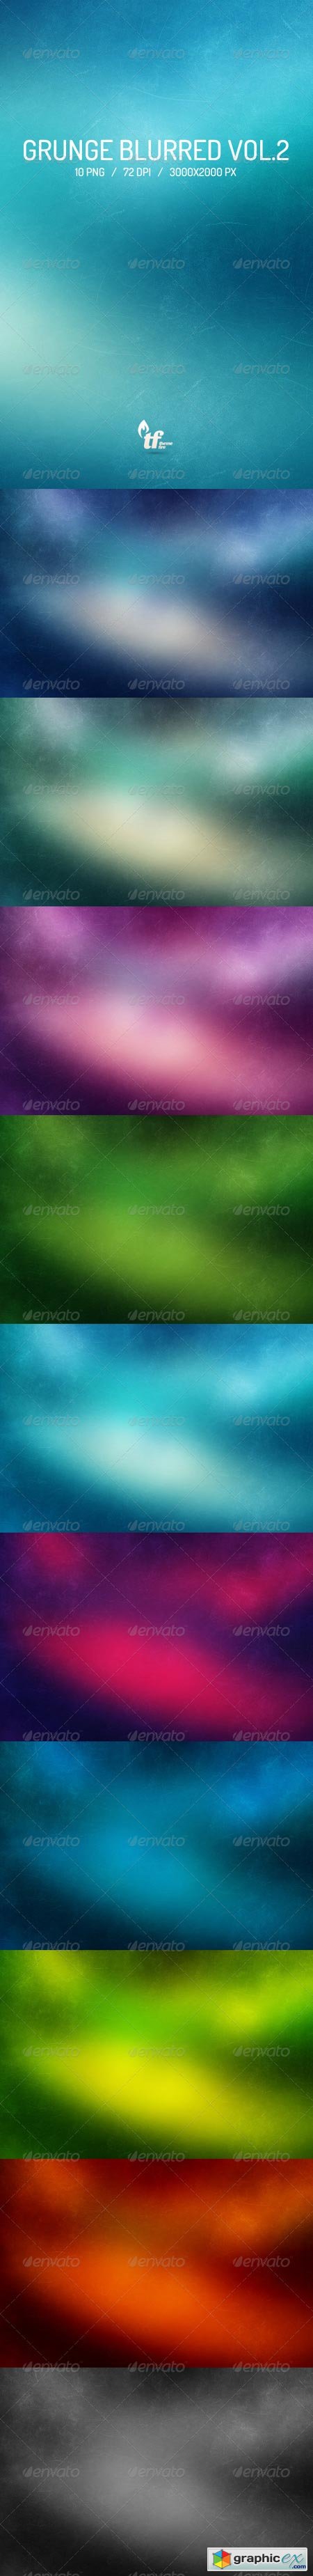 10 Grunge Blurred Backgrounds Vol.2 6869668